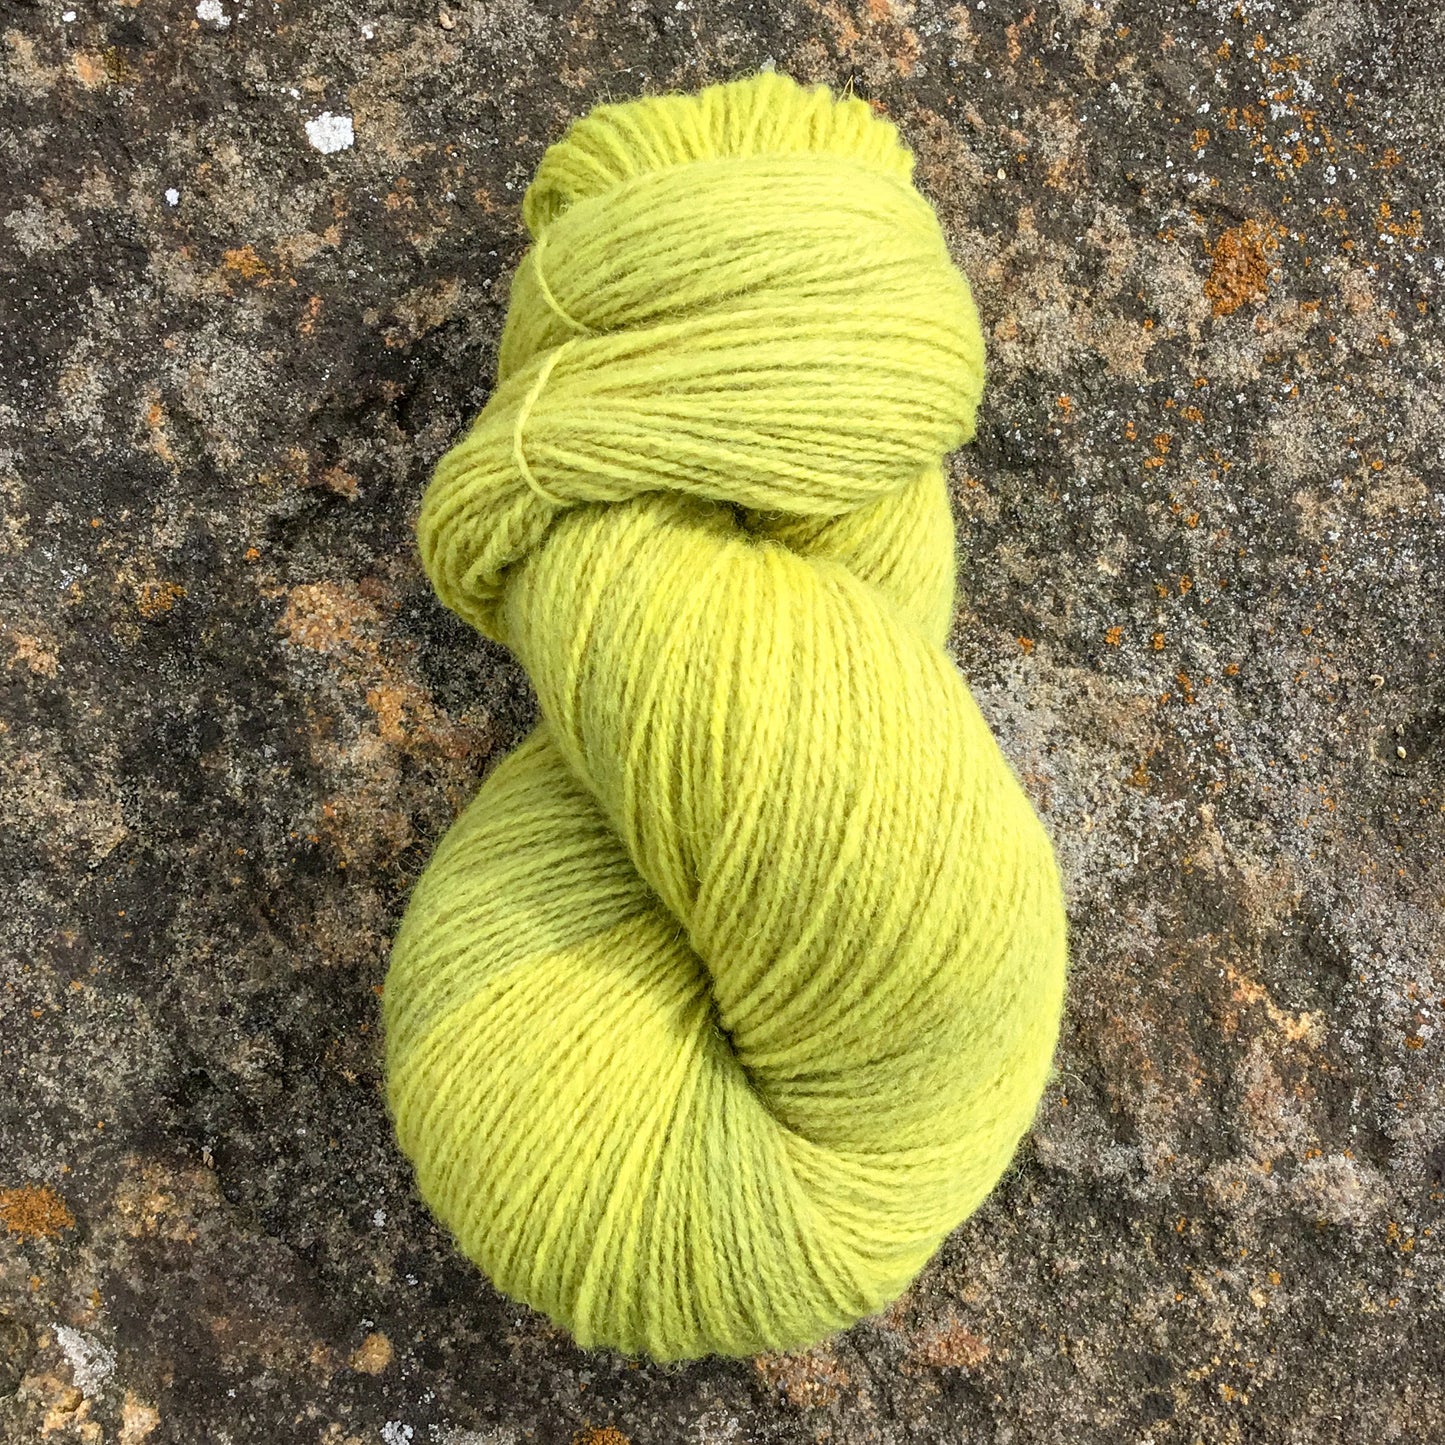 Olive Green Fingering Wool Yarn (80 Merino/20 Romney) 2 ply - 4 oz skeins